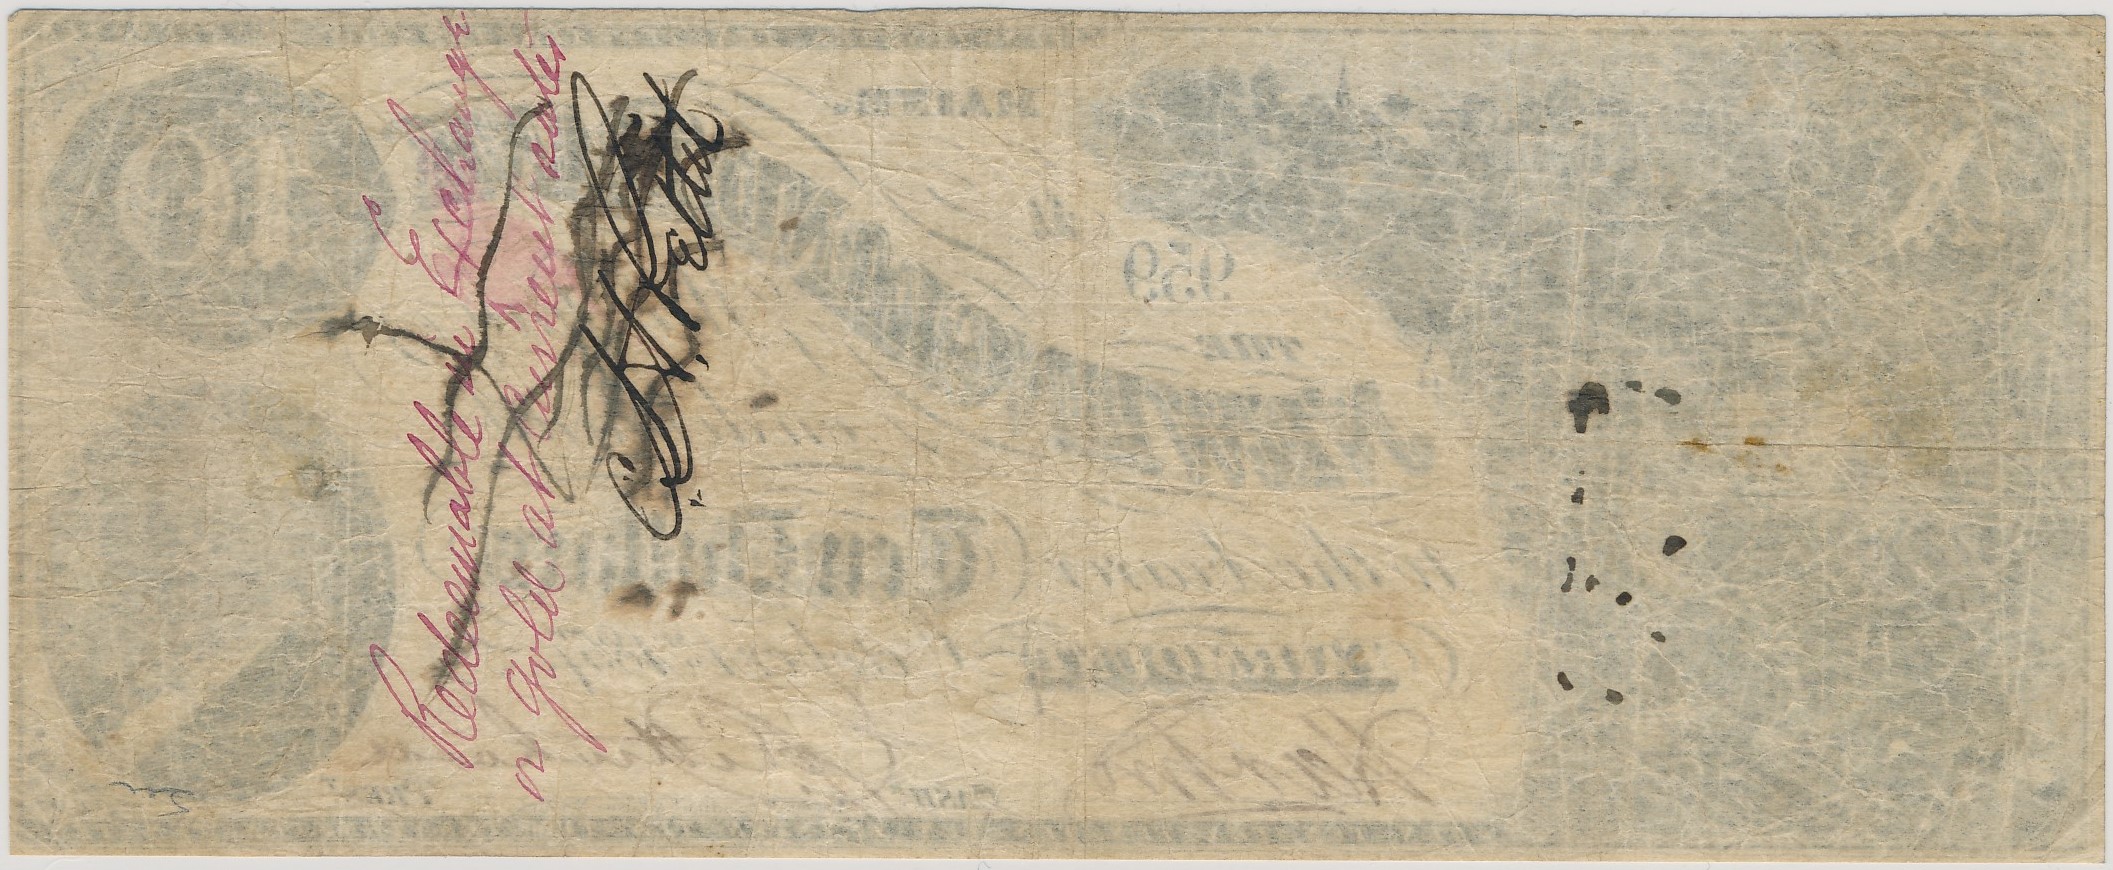 $10 C. H. Pettit (on New England Bank)